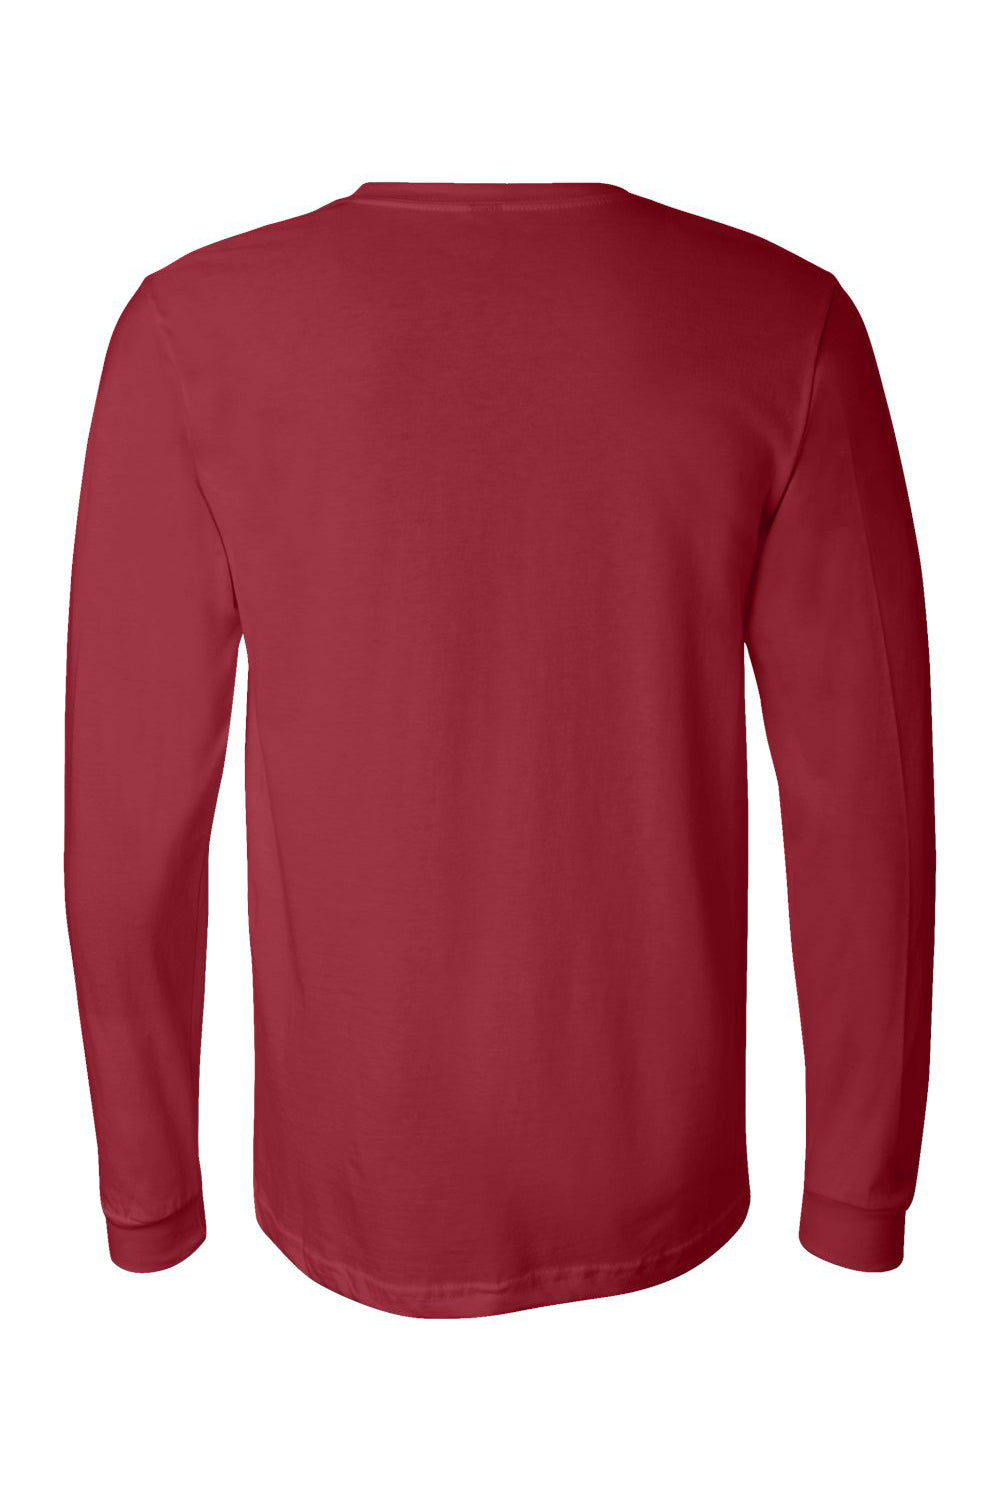 Bella + Canvas BC3501/3501 Mens Jersey Long Sleeve Crewneck T-Shirt Cardinal Red Flat Back